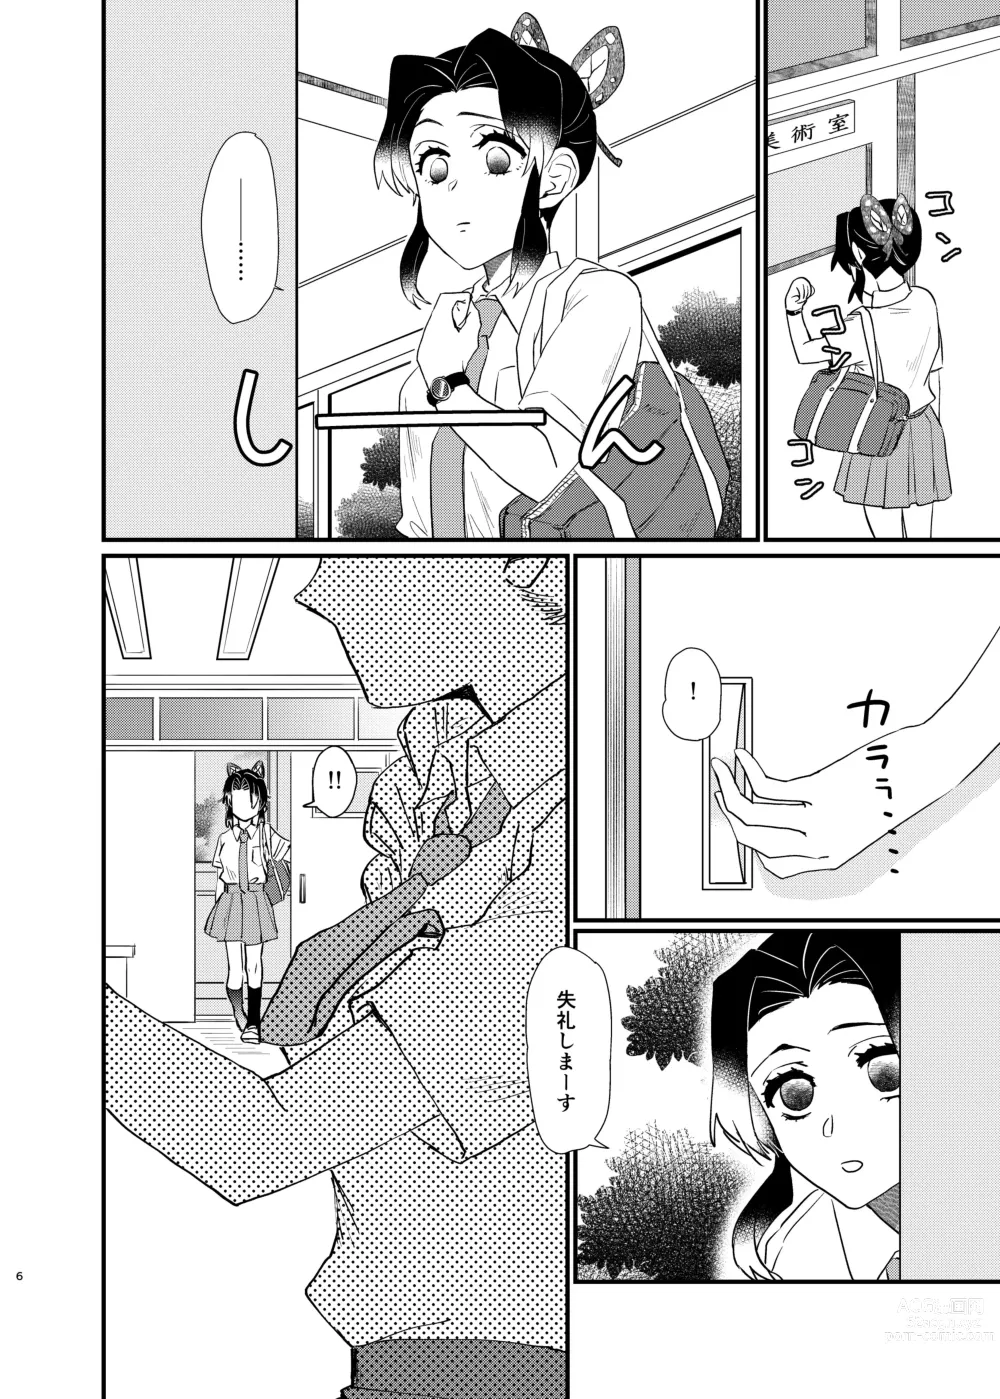 Page 6 of doujinshi Watashi no Alpha